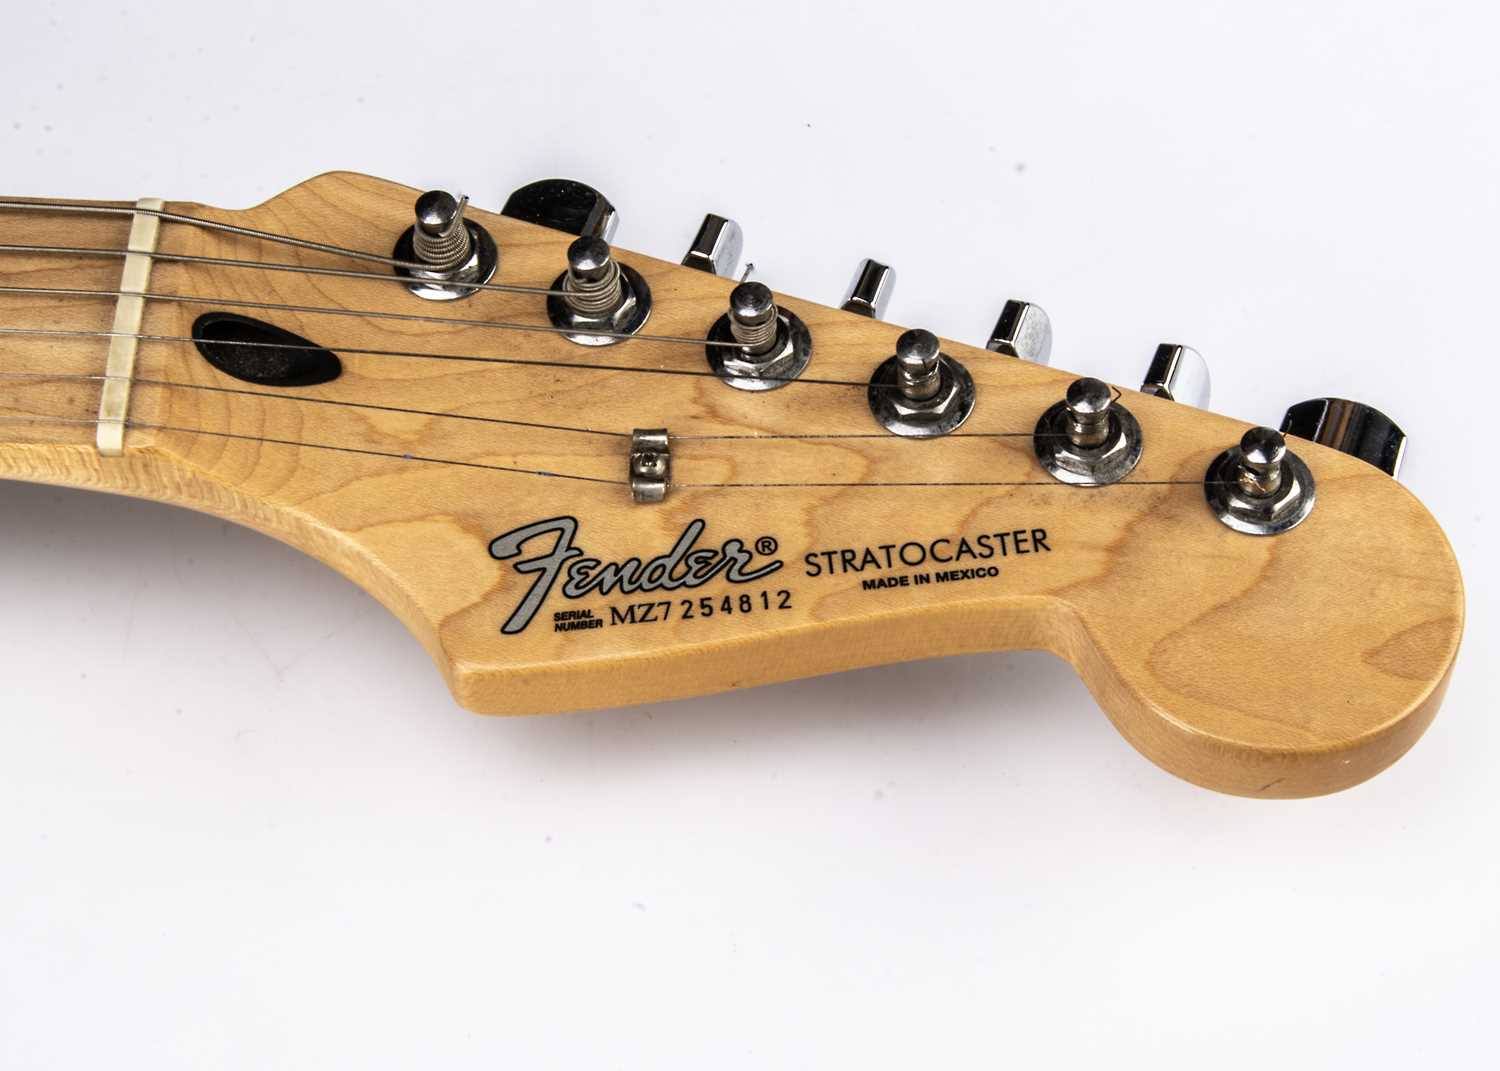 Fender Stratocaster Guitar, - Image 2 of 4